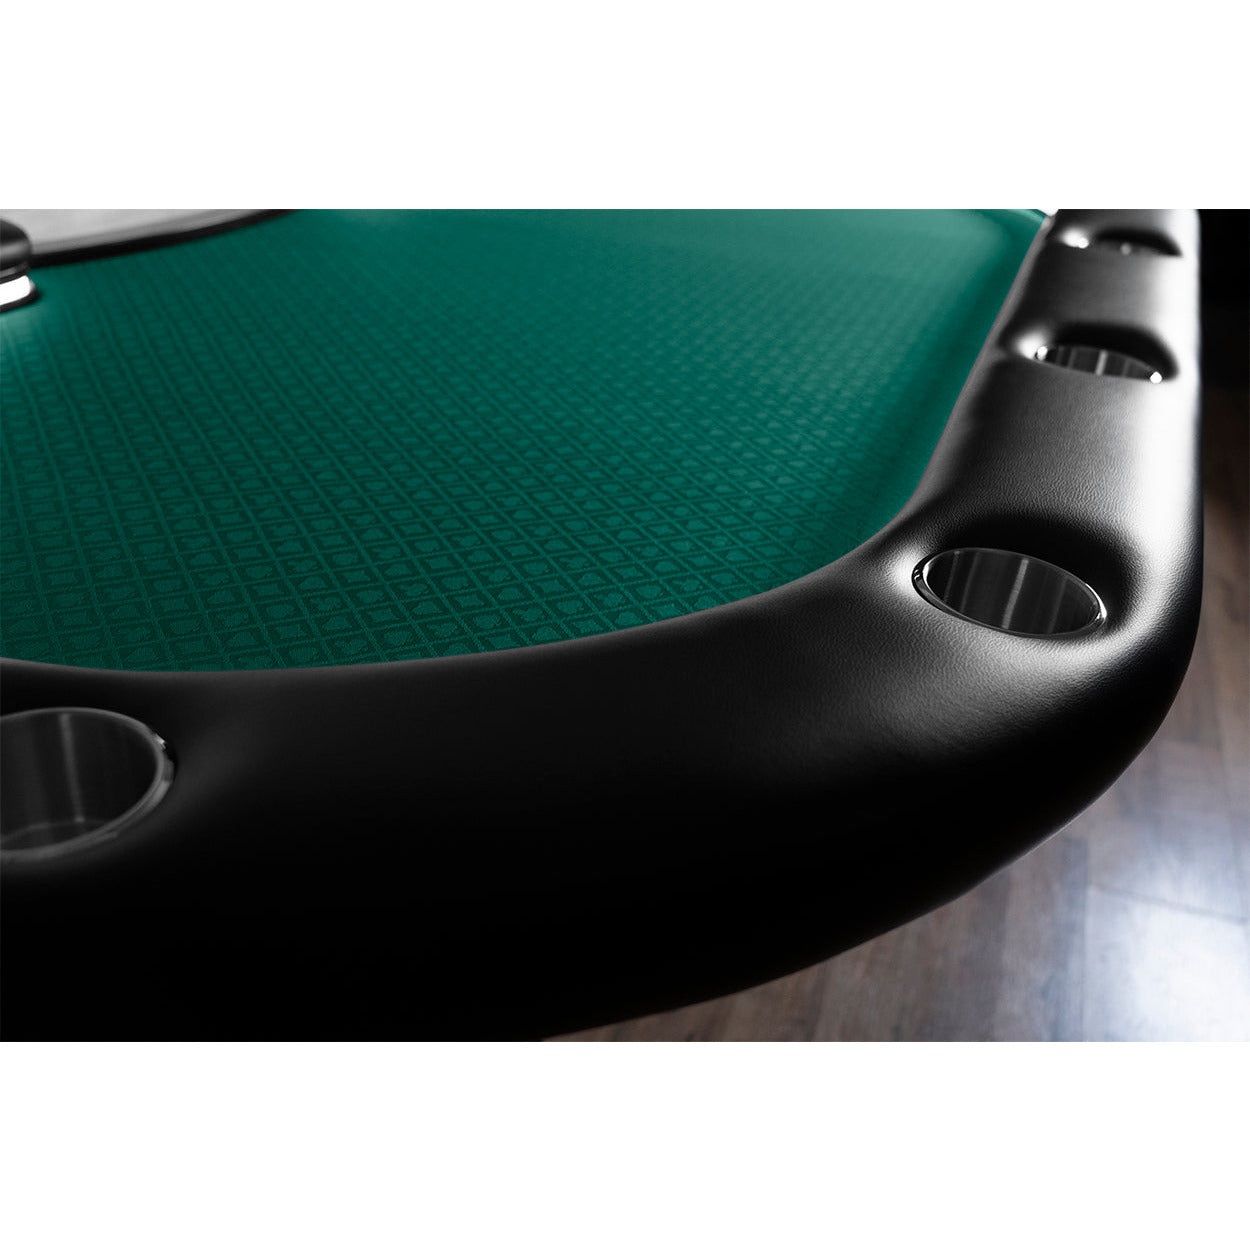 BBO The Aces Pro Alpha Folding Poker Table green speedcloth close up of corner